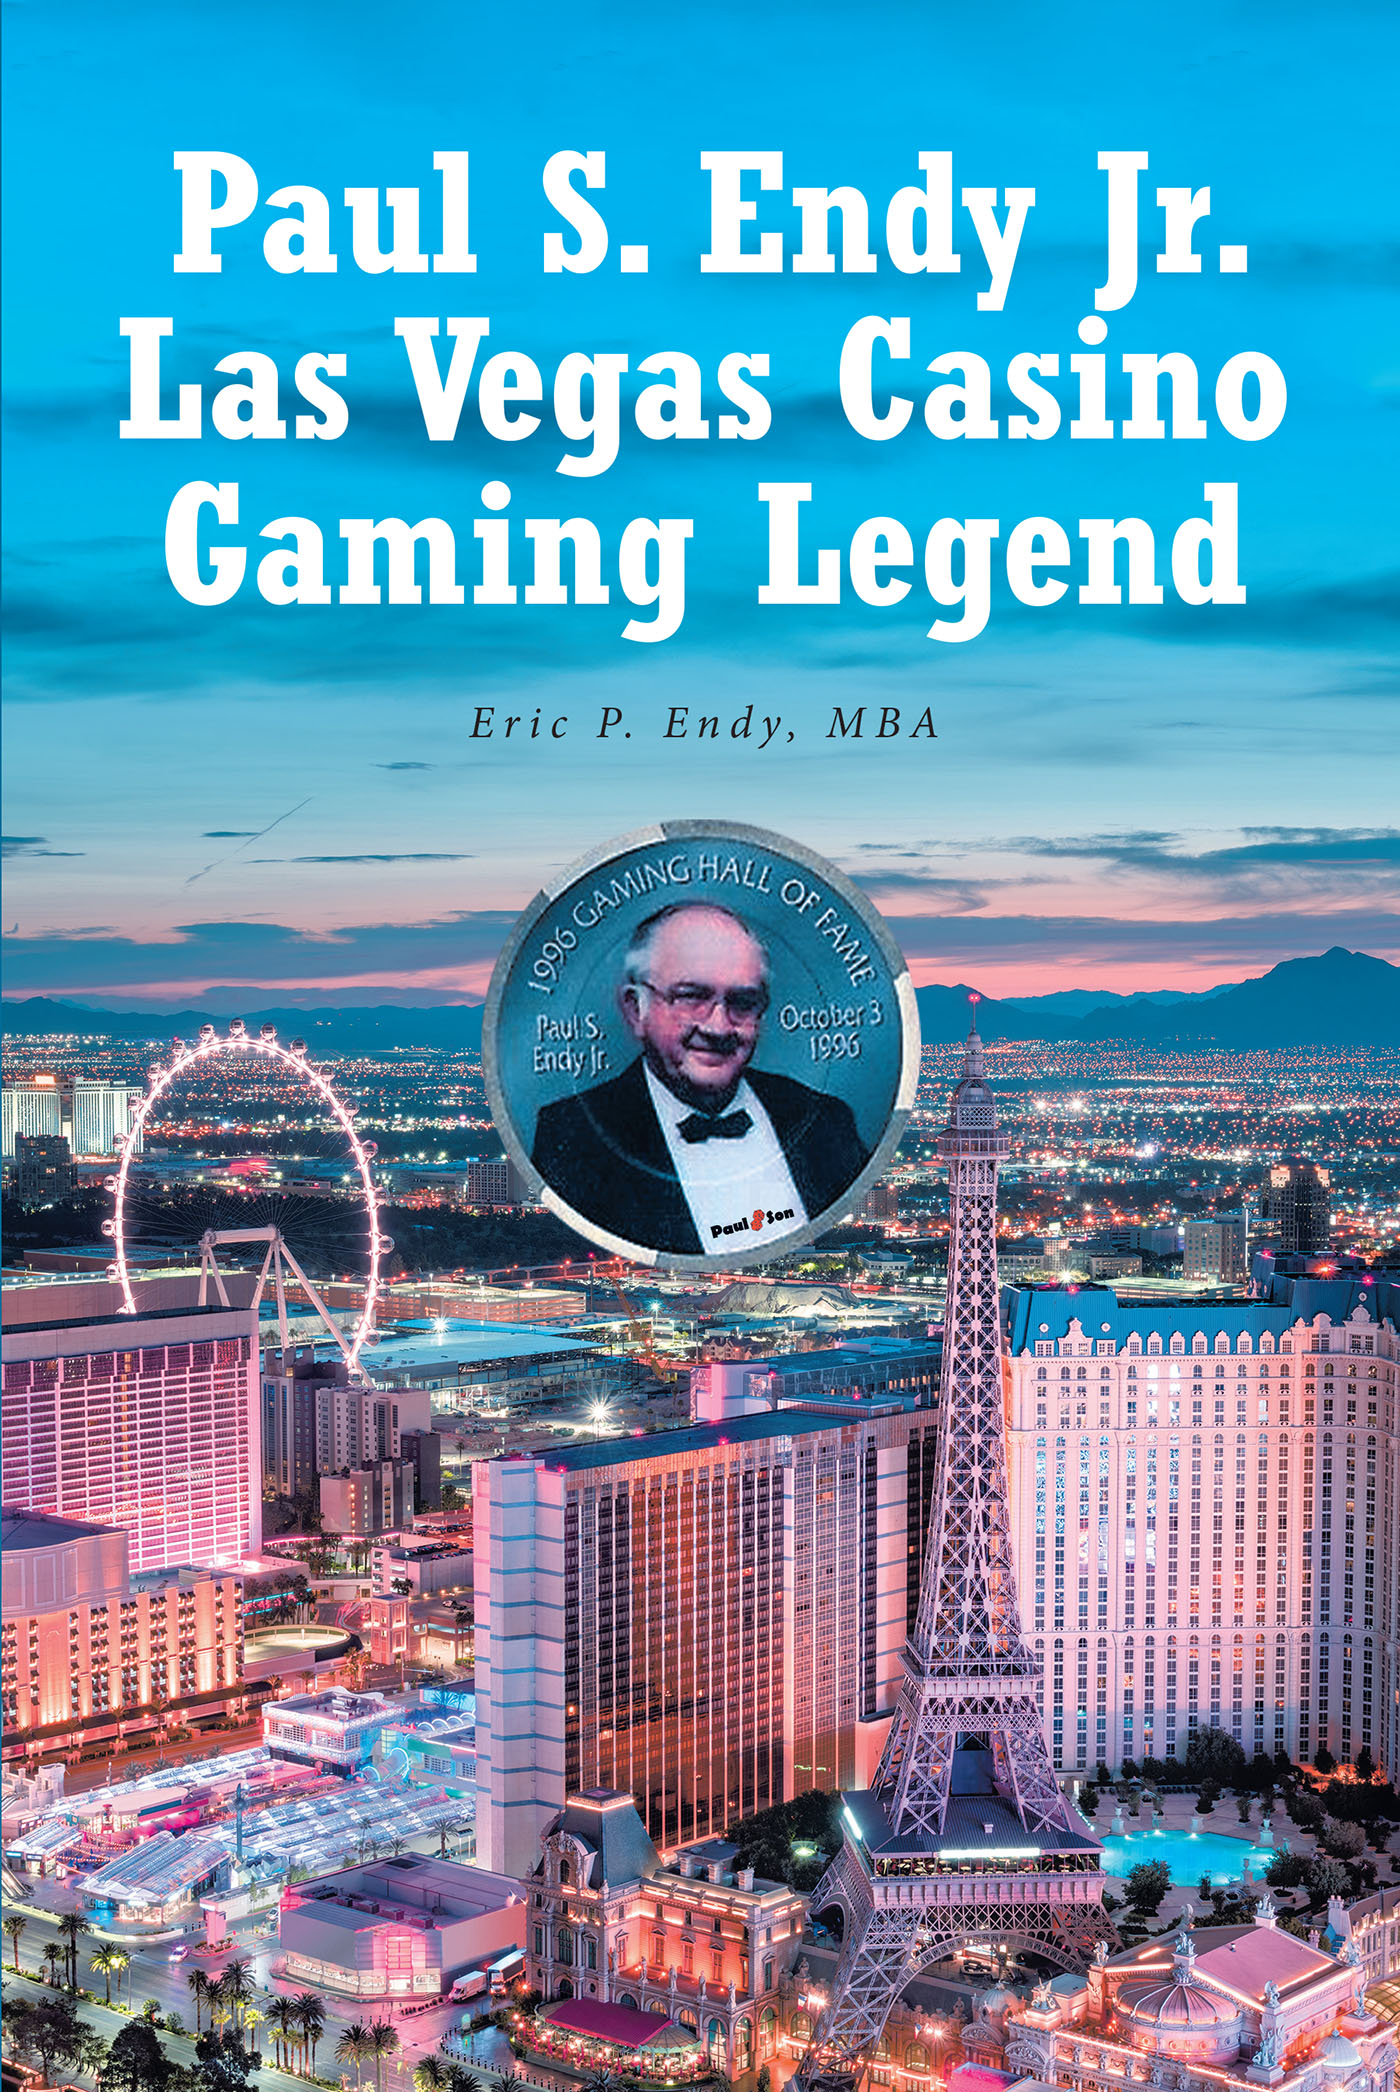 Paul S. Endy Jr. Las Vegas Casino Gaming Legend Cover Image